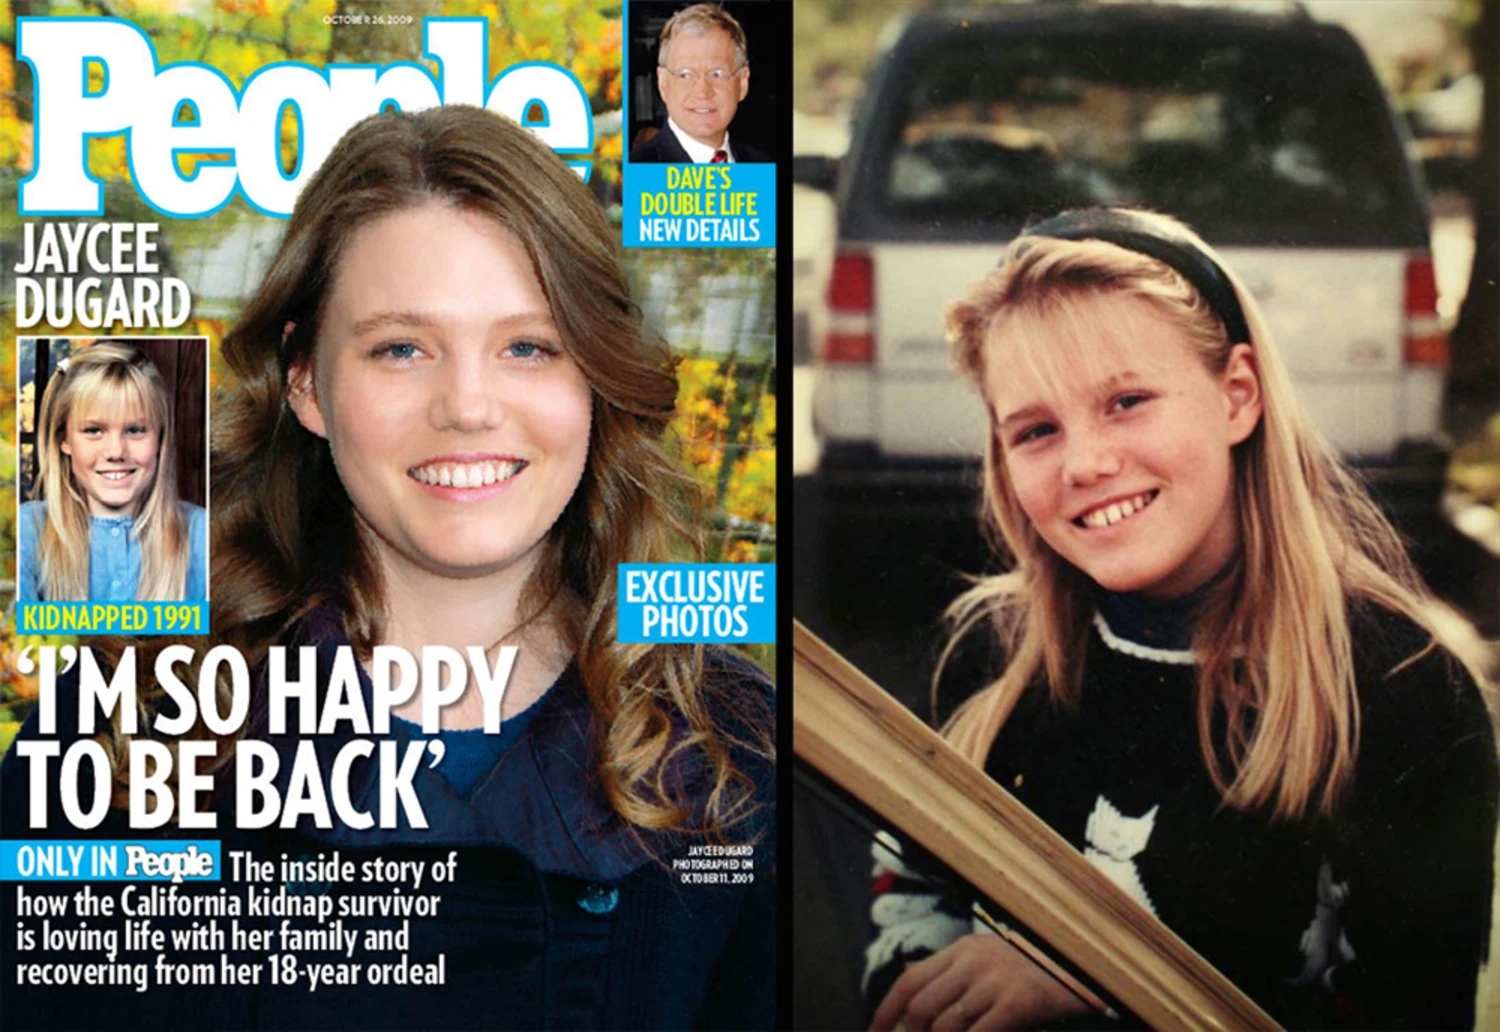 Jaycee Dugard on the People magazine cover; Young Jaycee Dugard smiling